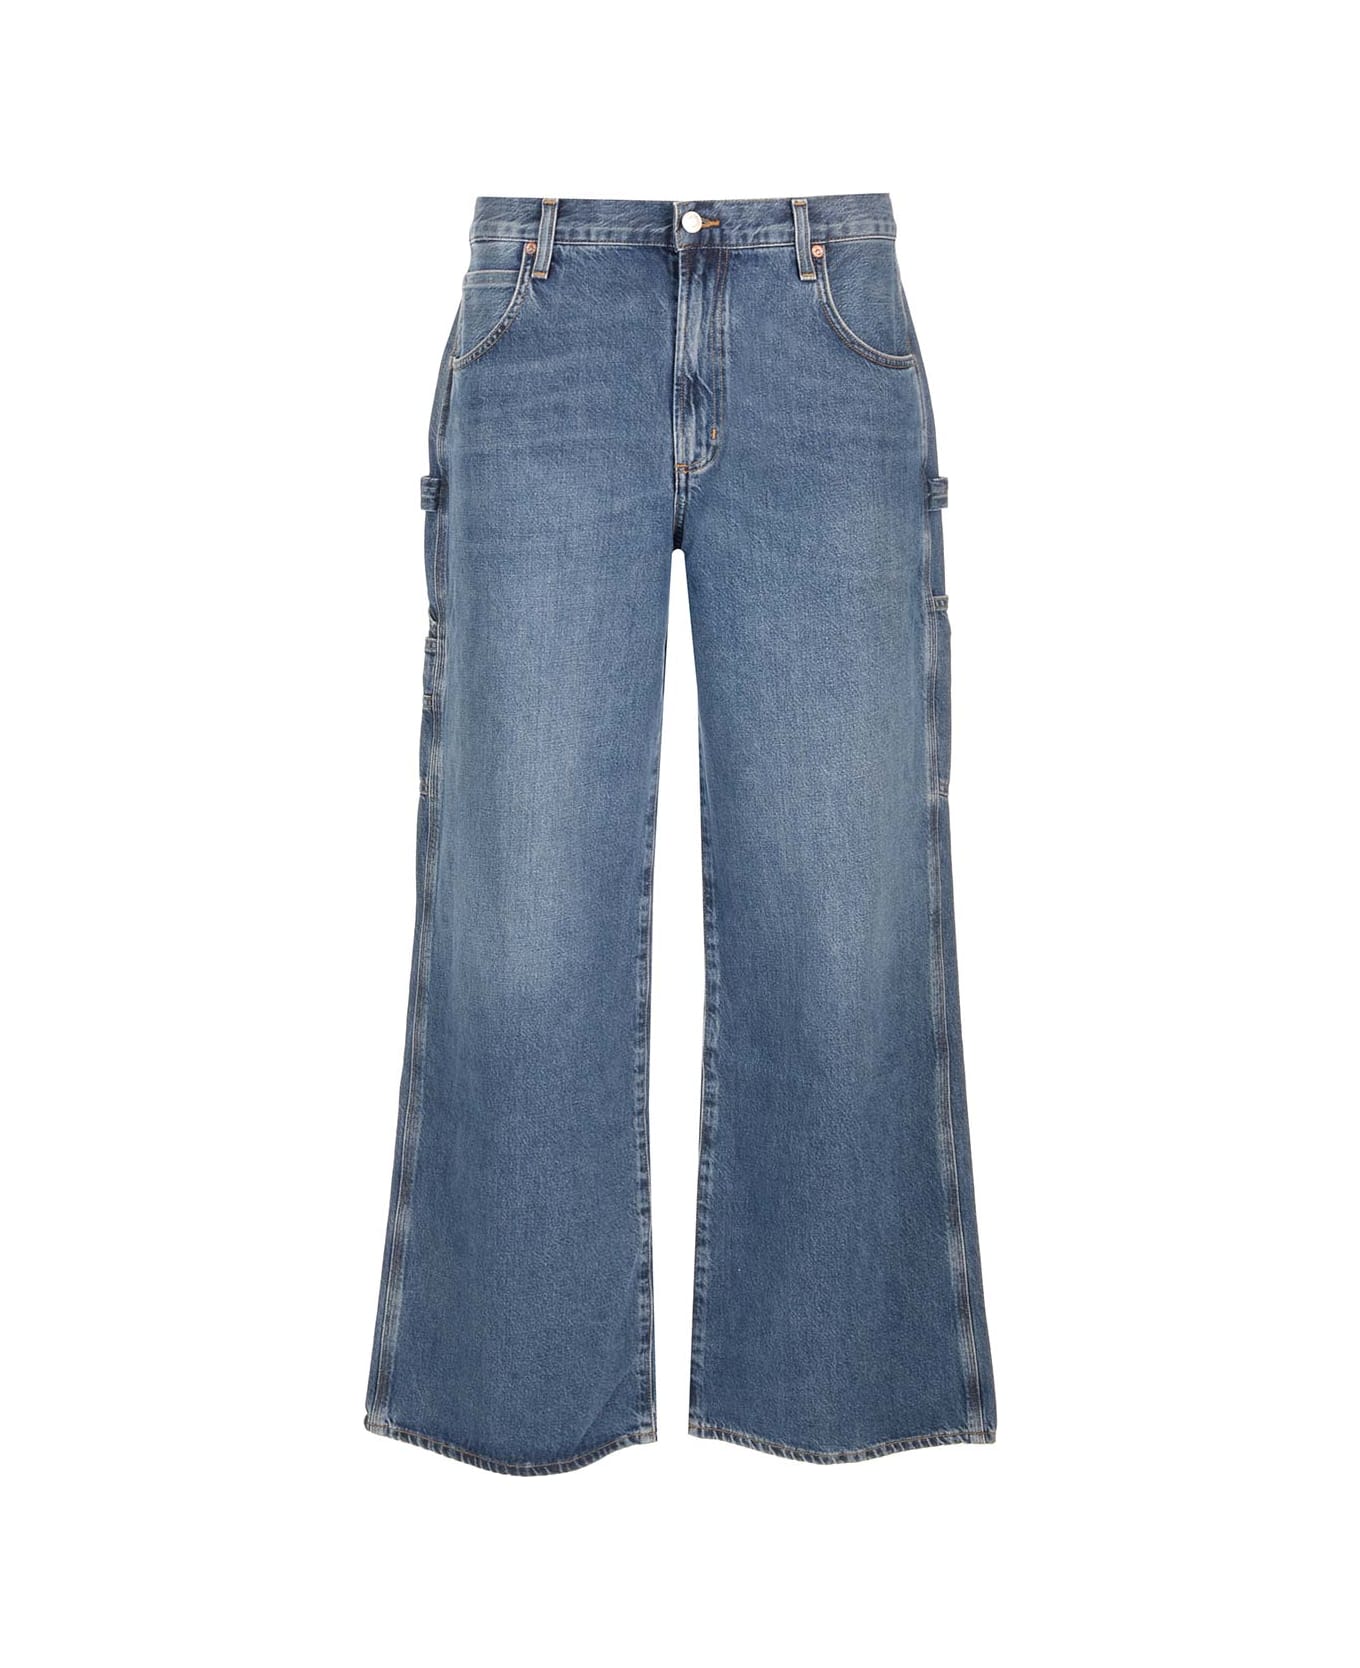 AGOLDE 'otto Carpenter' Jeans - BLUE